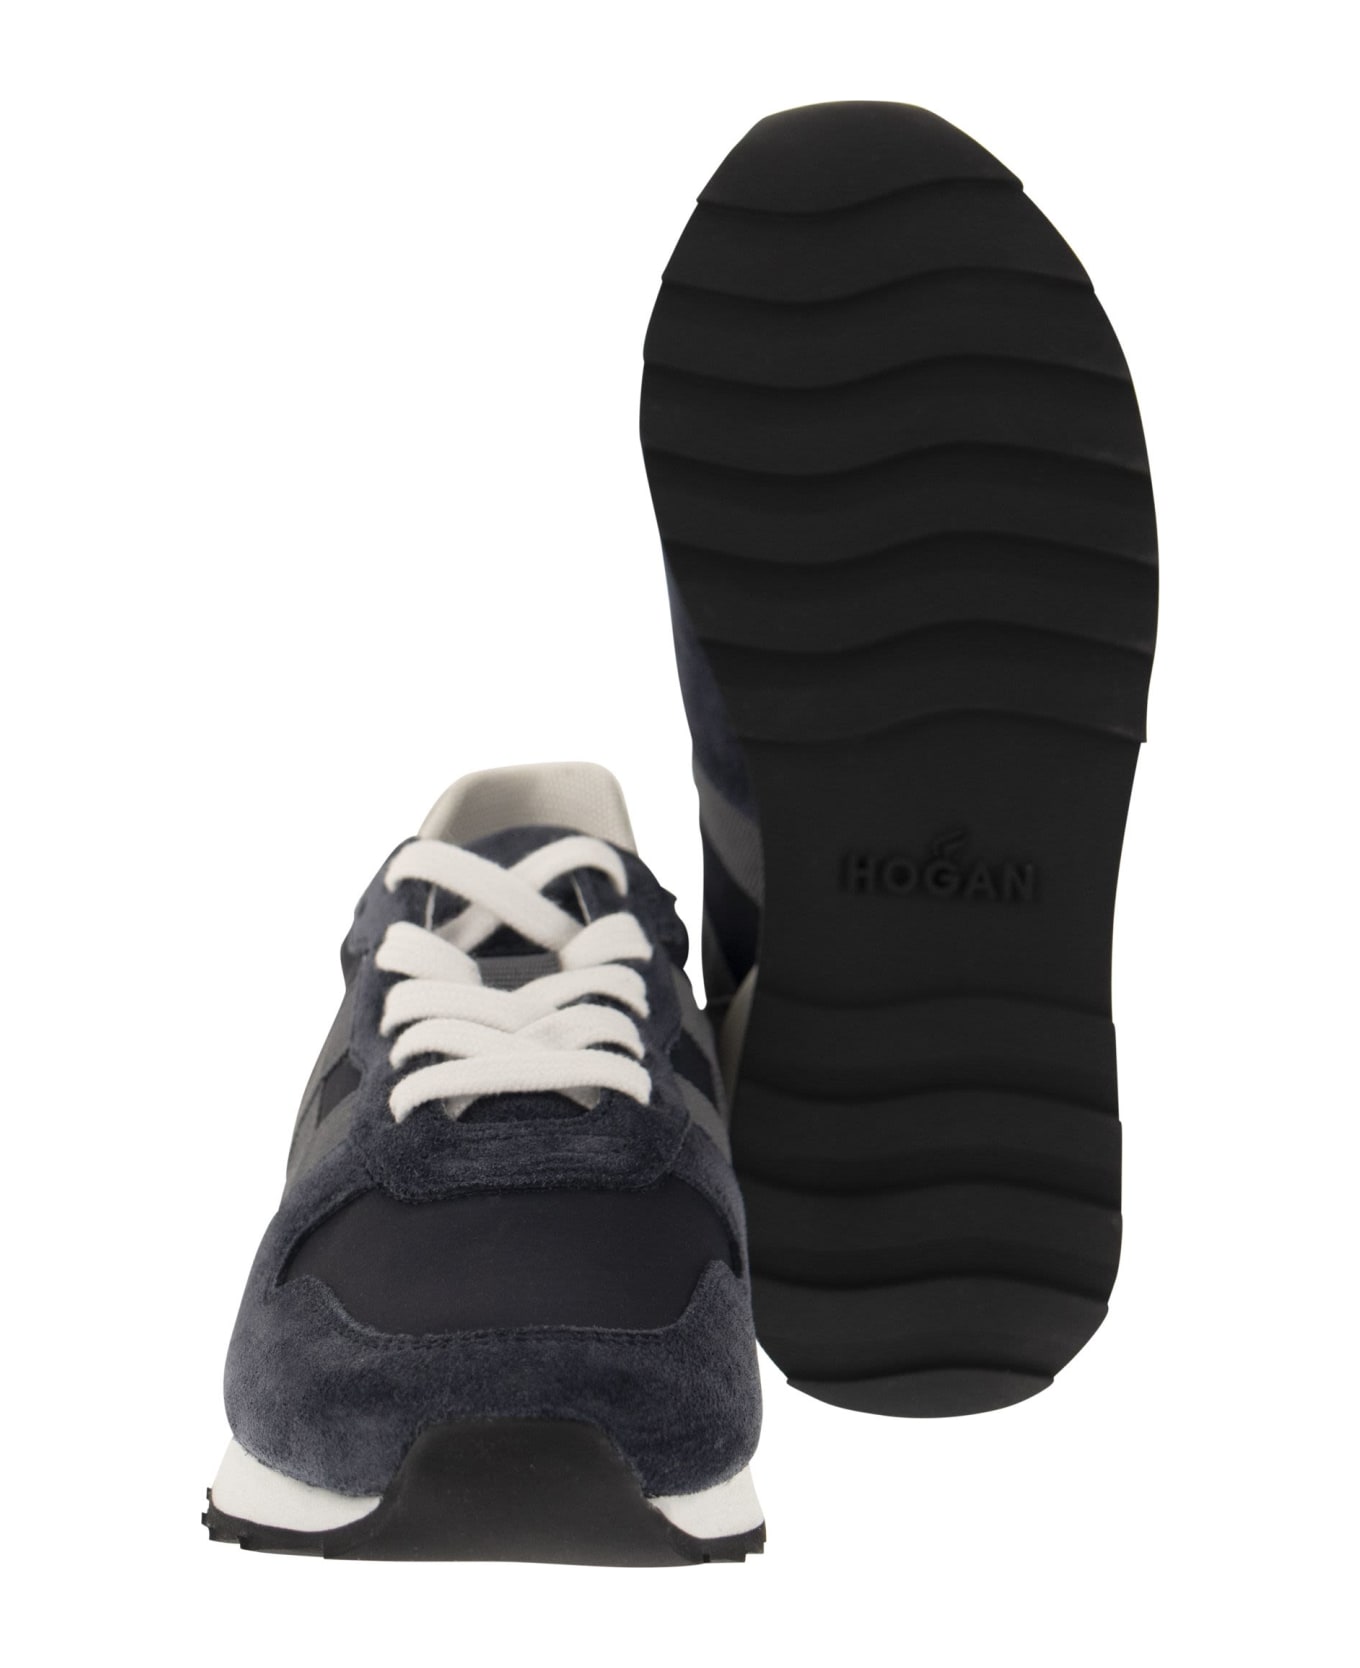 Hogan R261 - Sneakers - Blue/grey